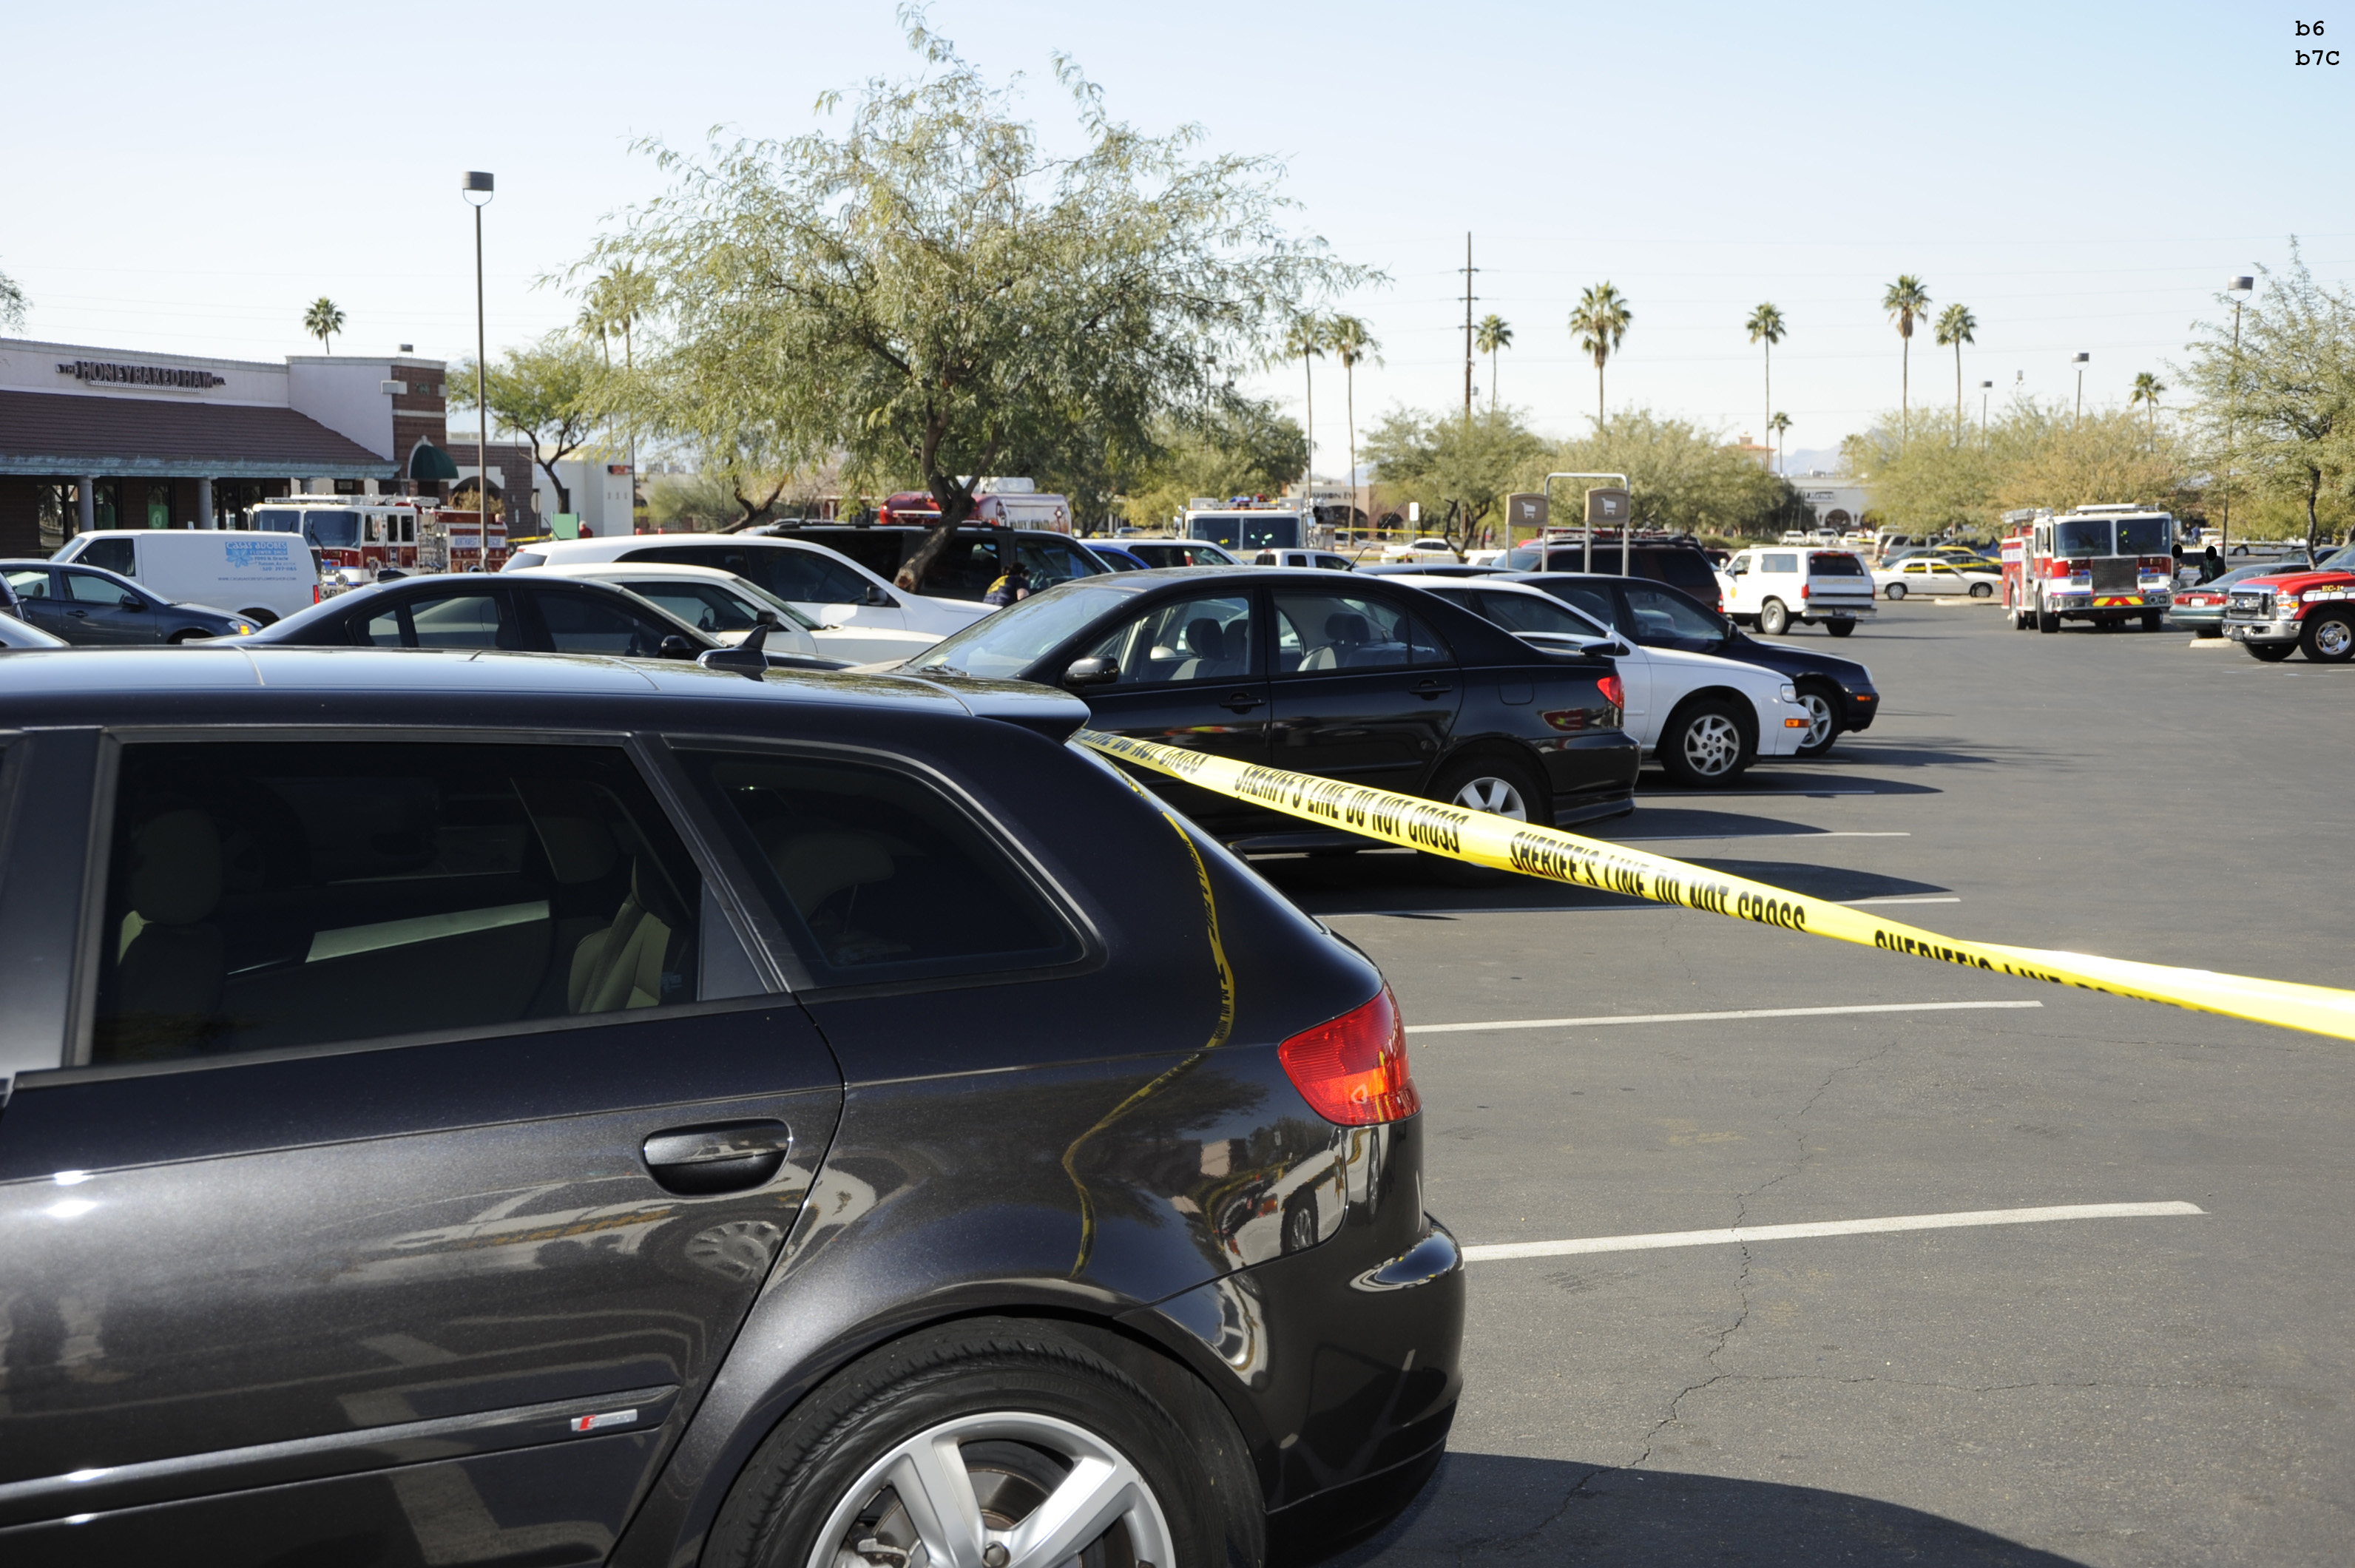 2011 Tucson Shooting Crime Scene - Photograph 23